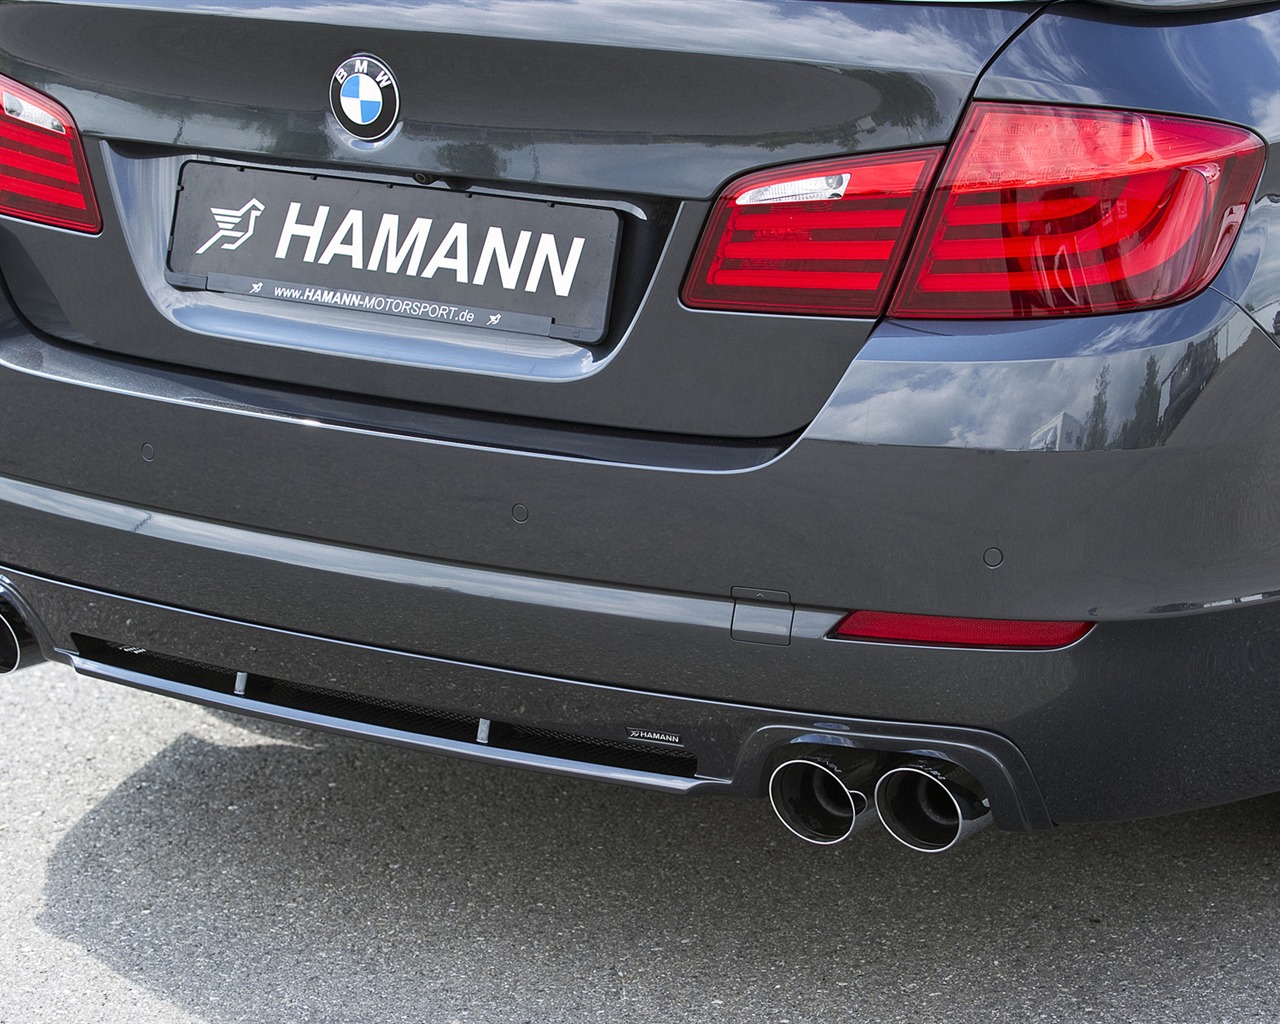 Hamann BMW 5-series F10 - 2010 寶馬 #18 - 1280x1024